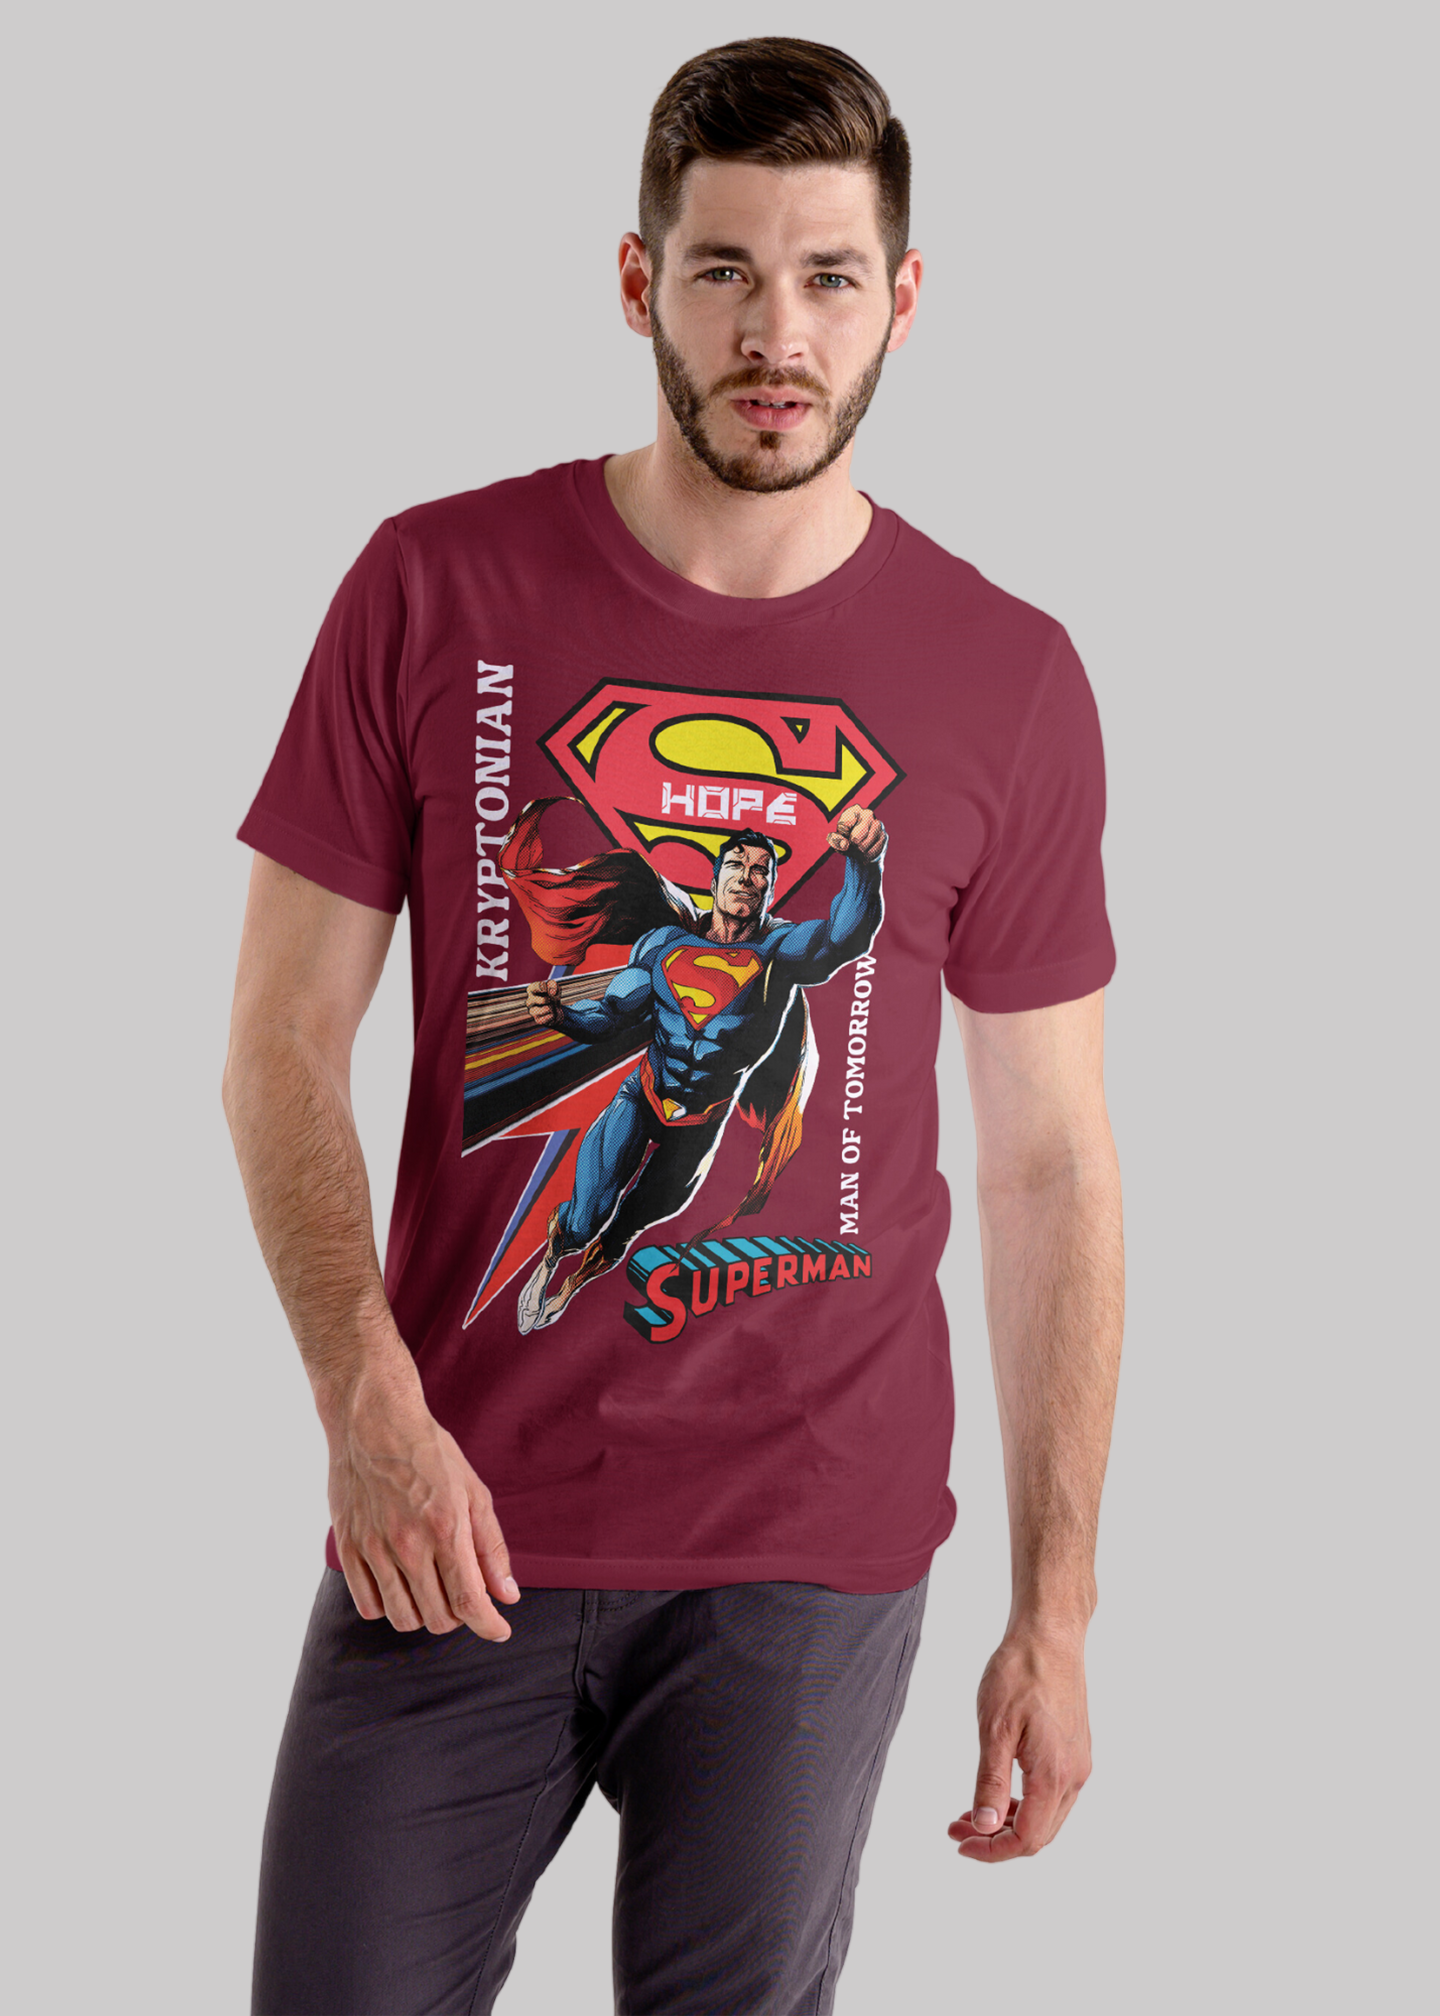 Superman man of tomorrow Printed Half Sleeve Premium Cotton T-shirt For Men